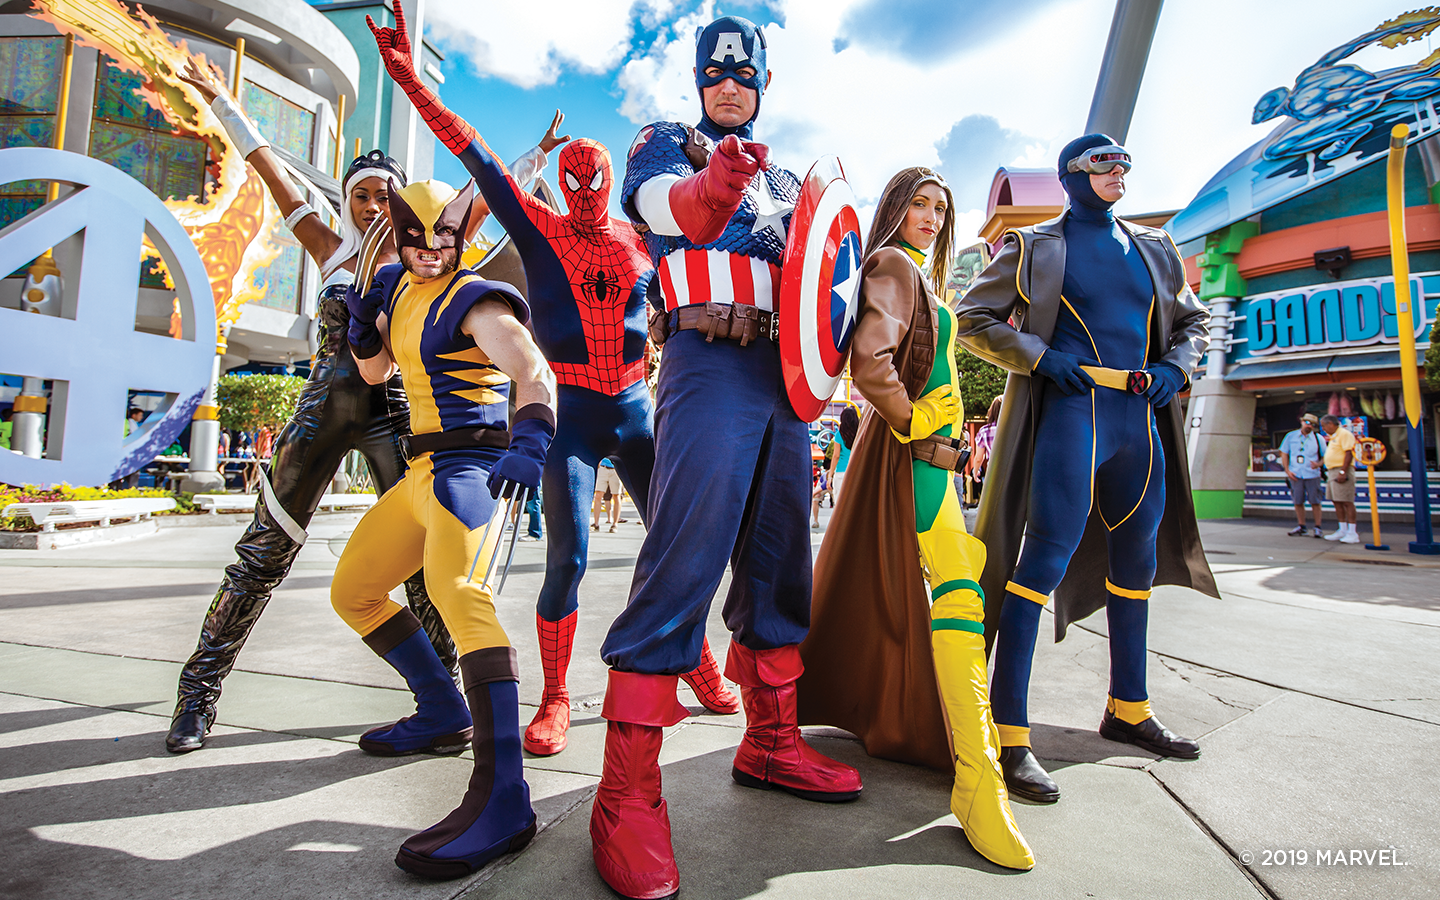 Universal Orlando's Travel Guide To Marvel Super Hero Island